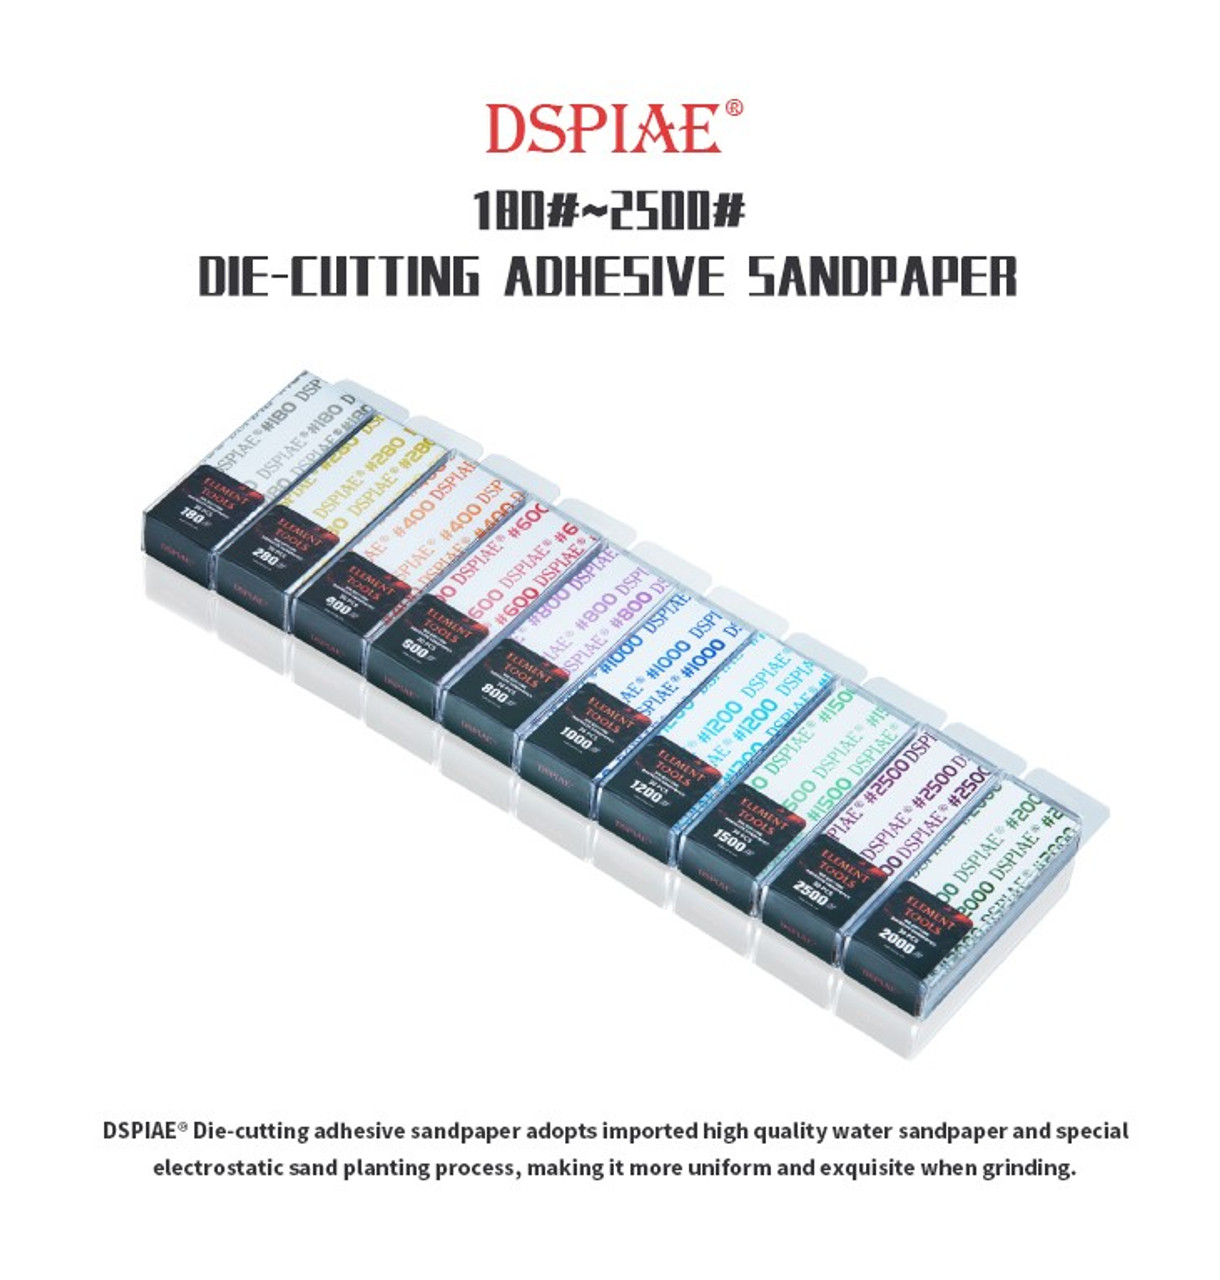 DSPIAE 1000# Pre-Cut Adhesive Sandpaper